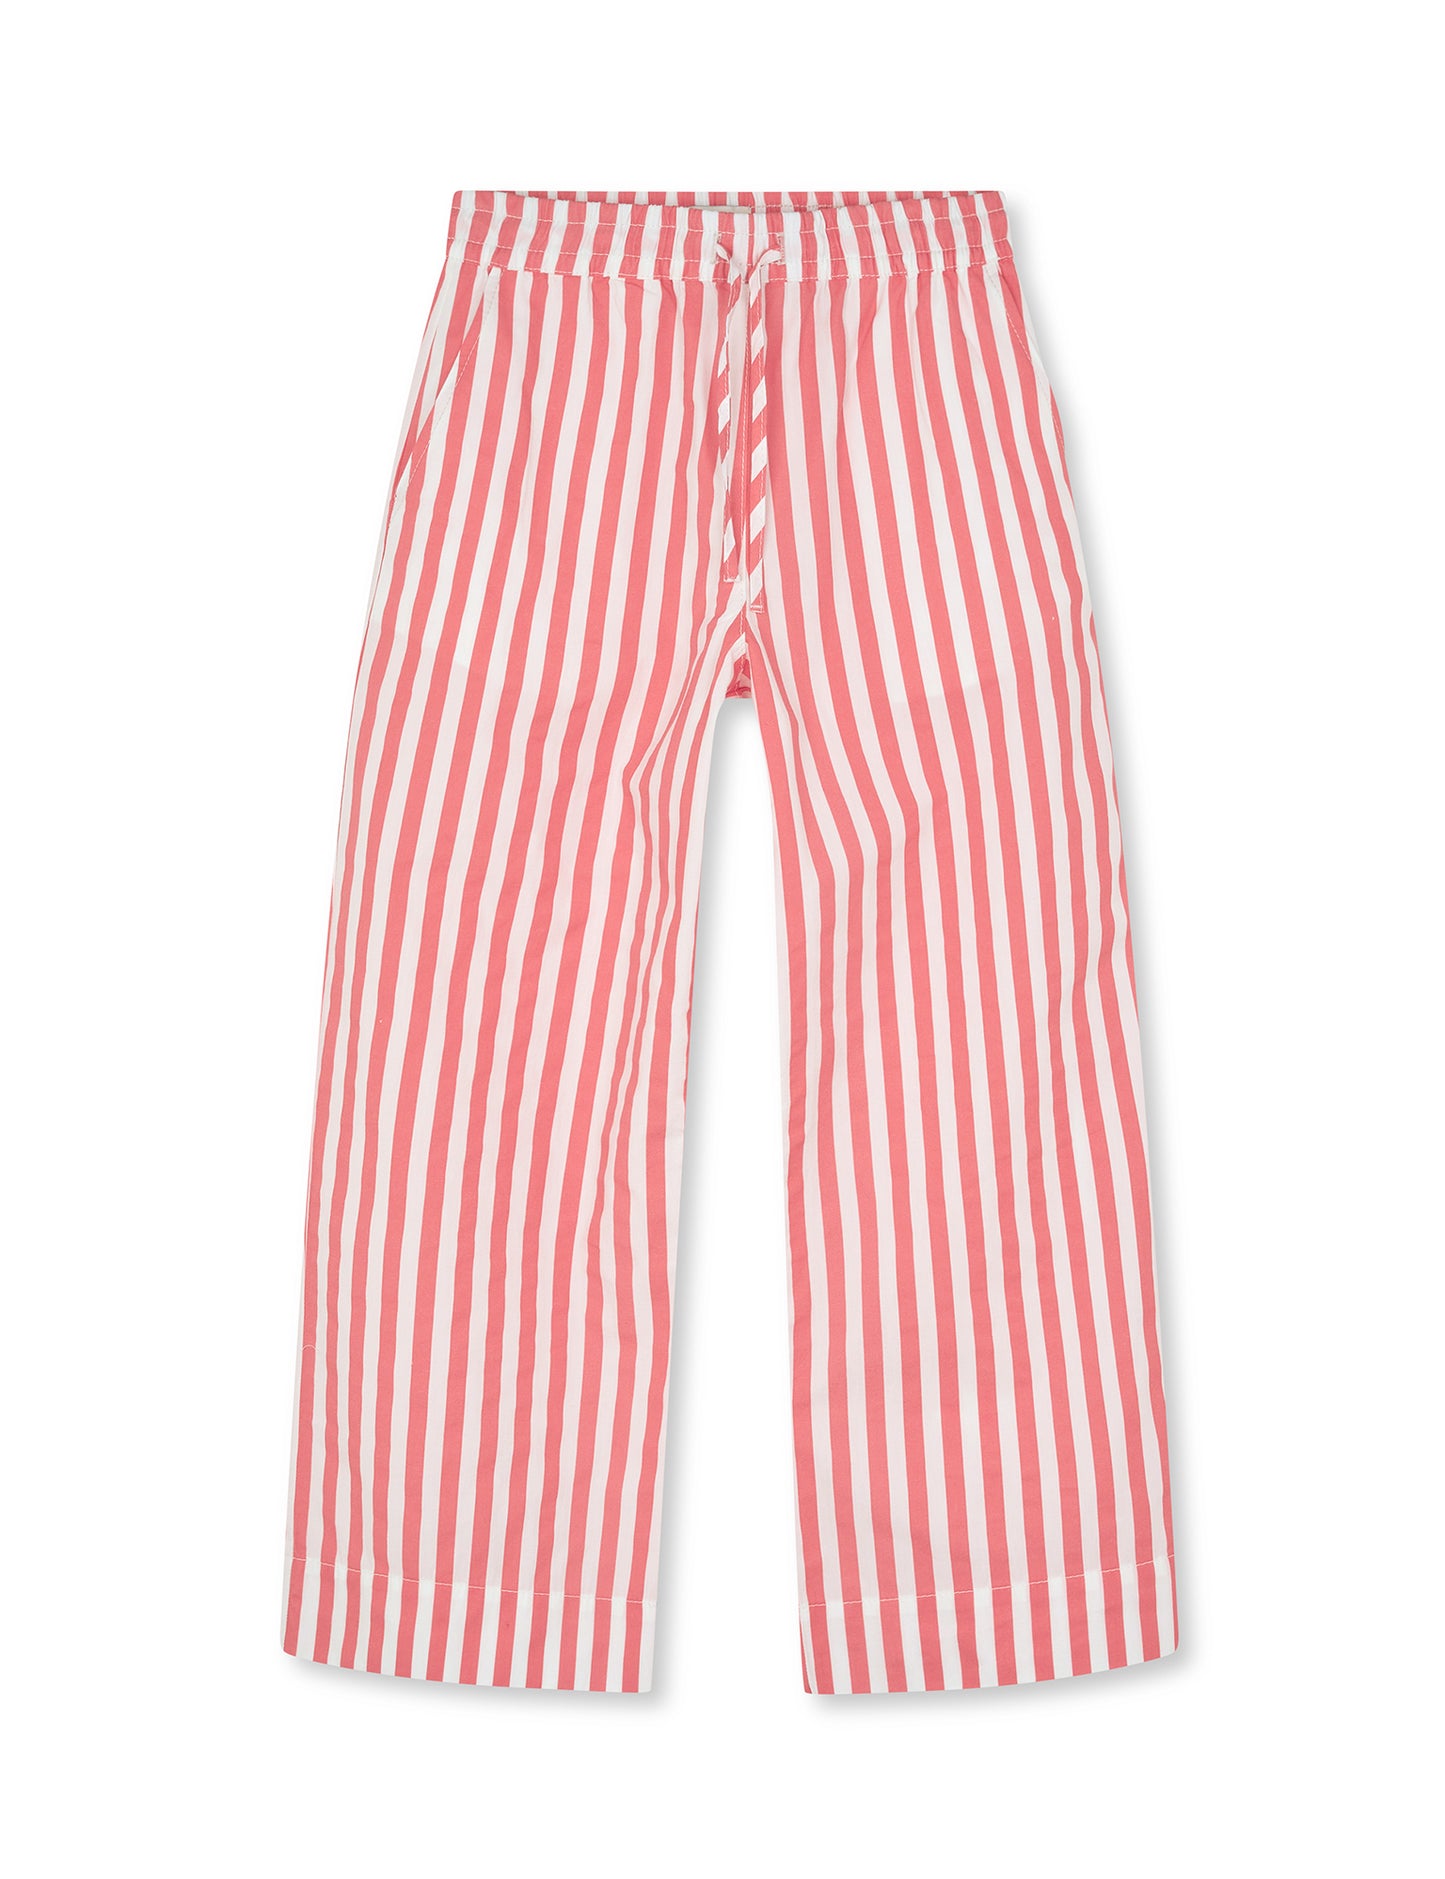 Sacky Pipa Pants, White Alyssum/Shell Pink